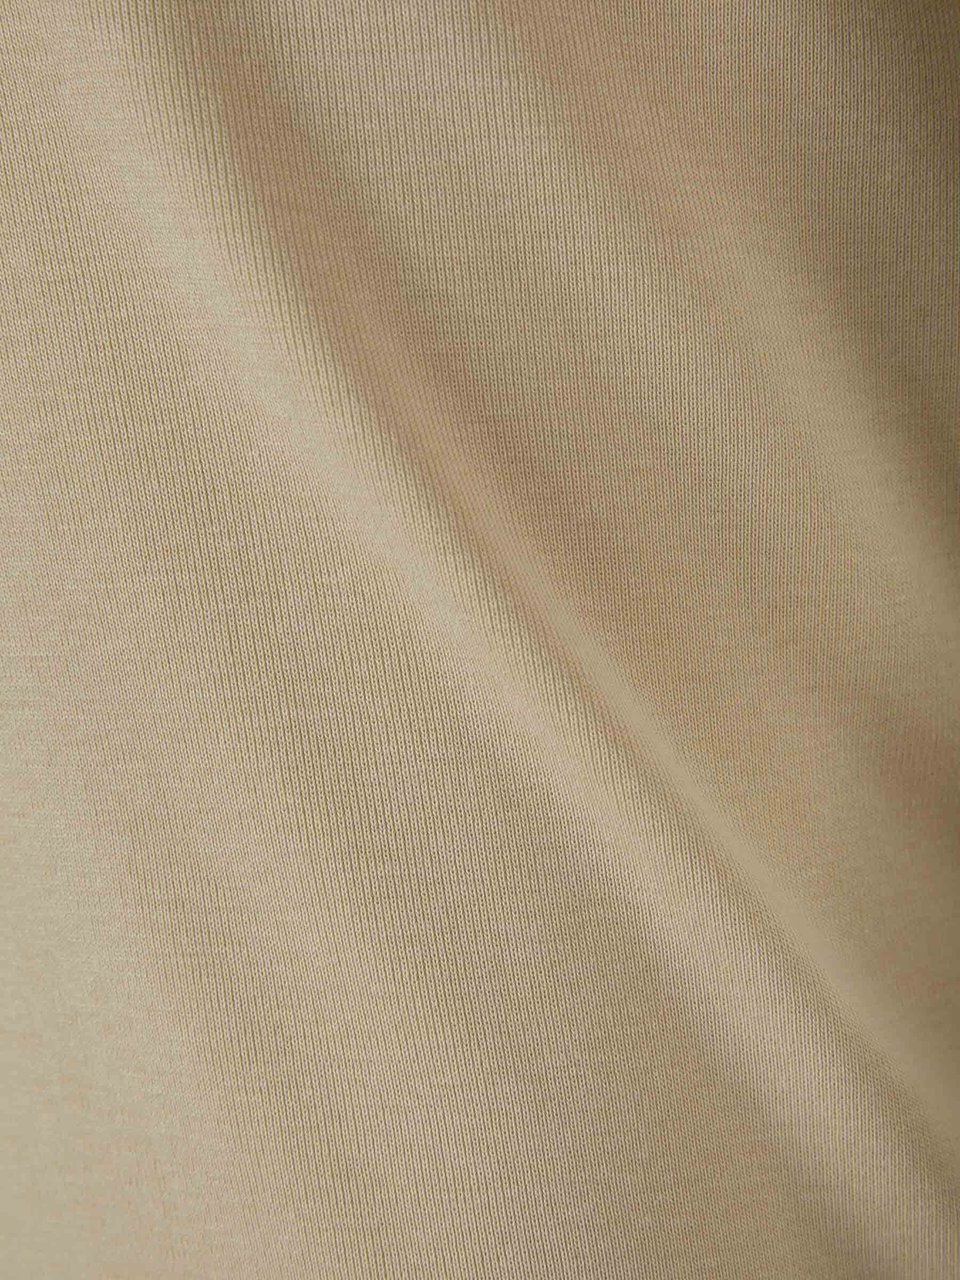 Tom Ford Plain Cotton T-shirt Beige